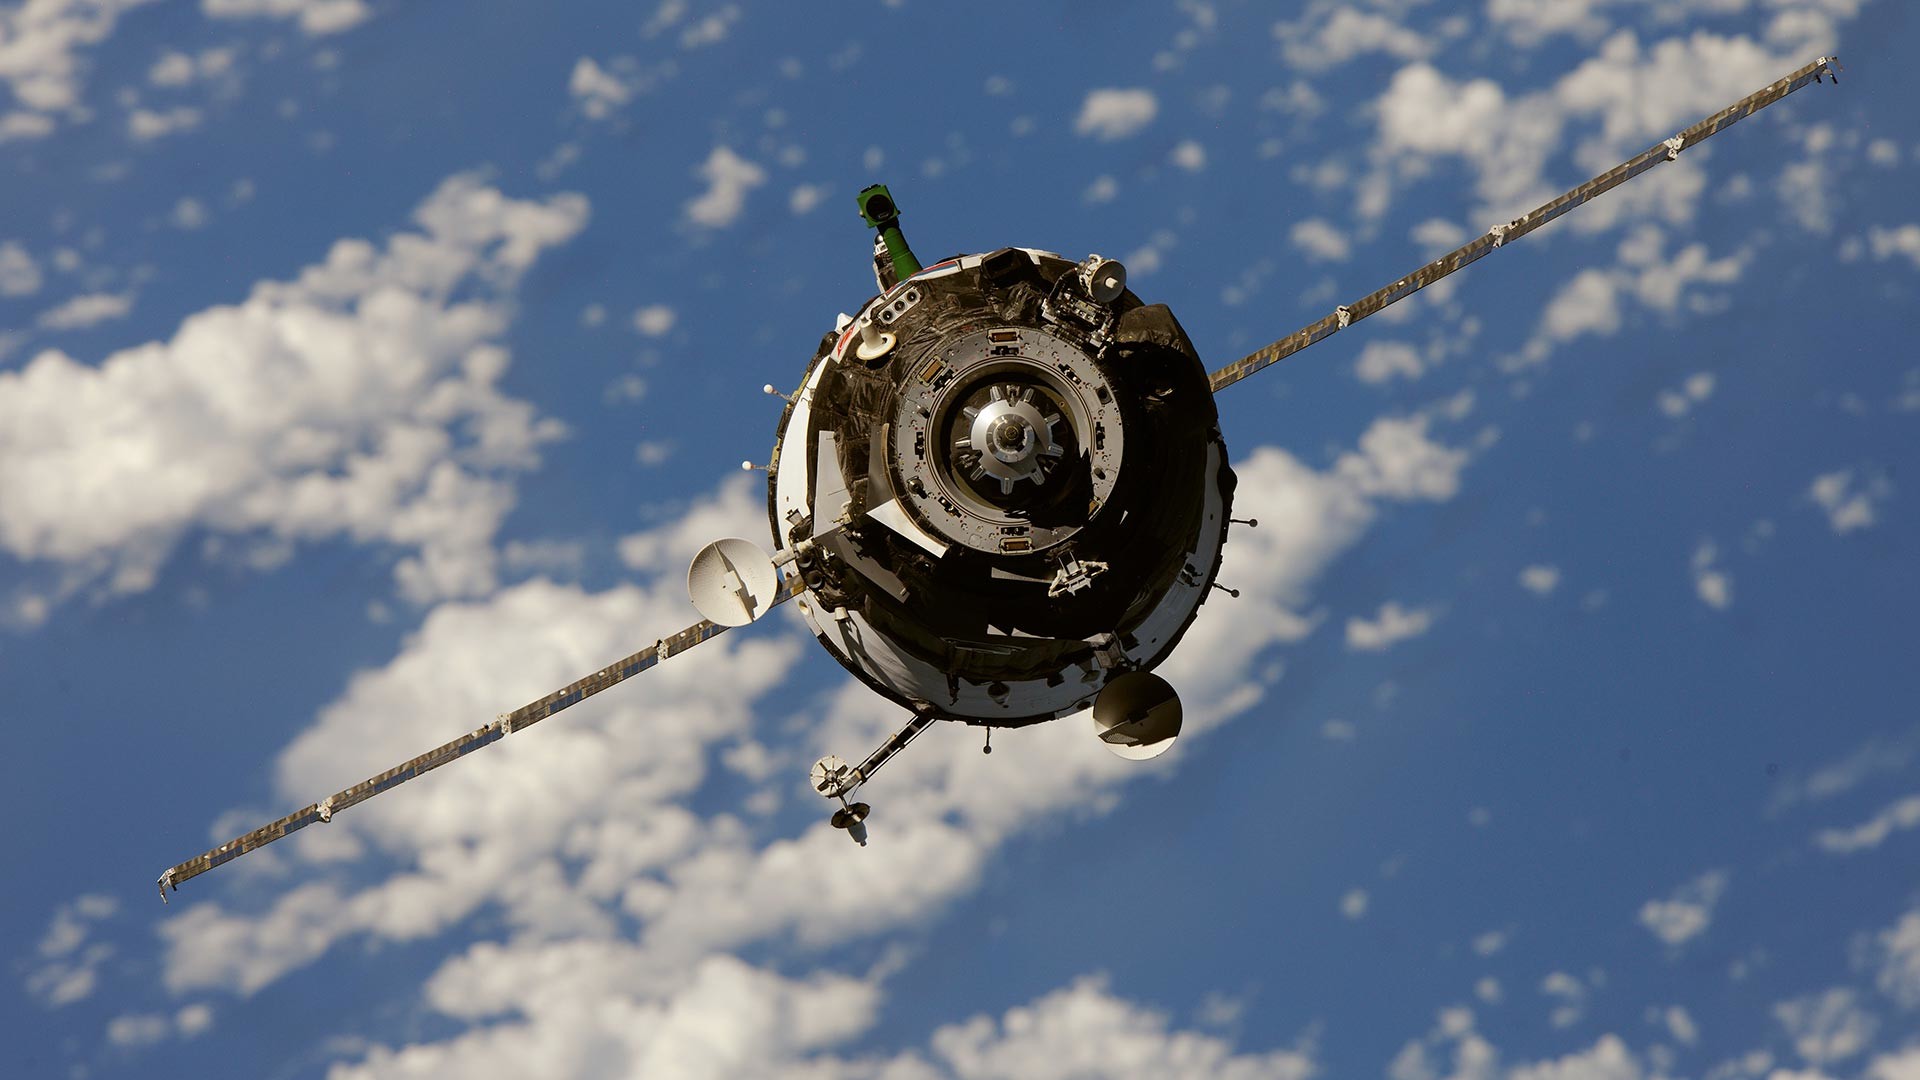 The Soyuz TMA-01M 